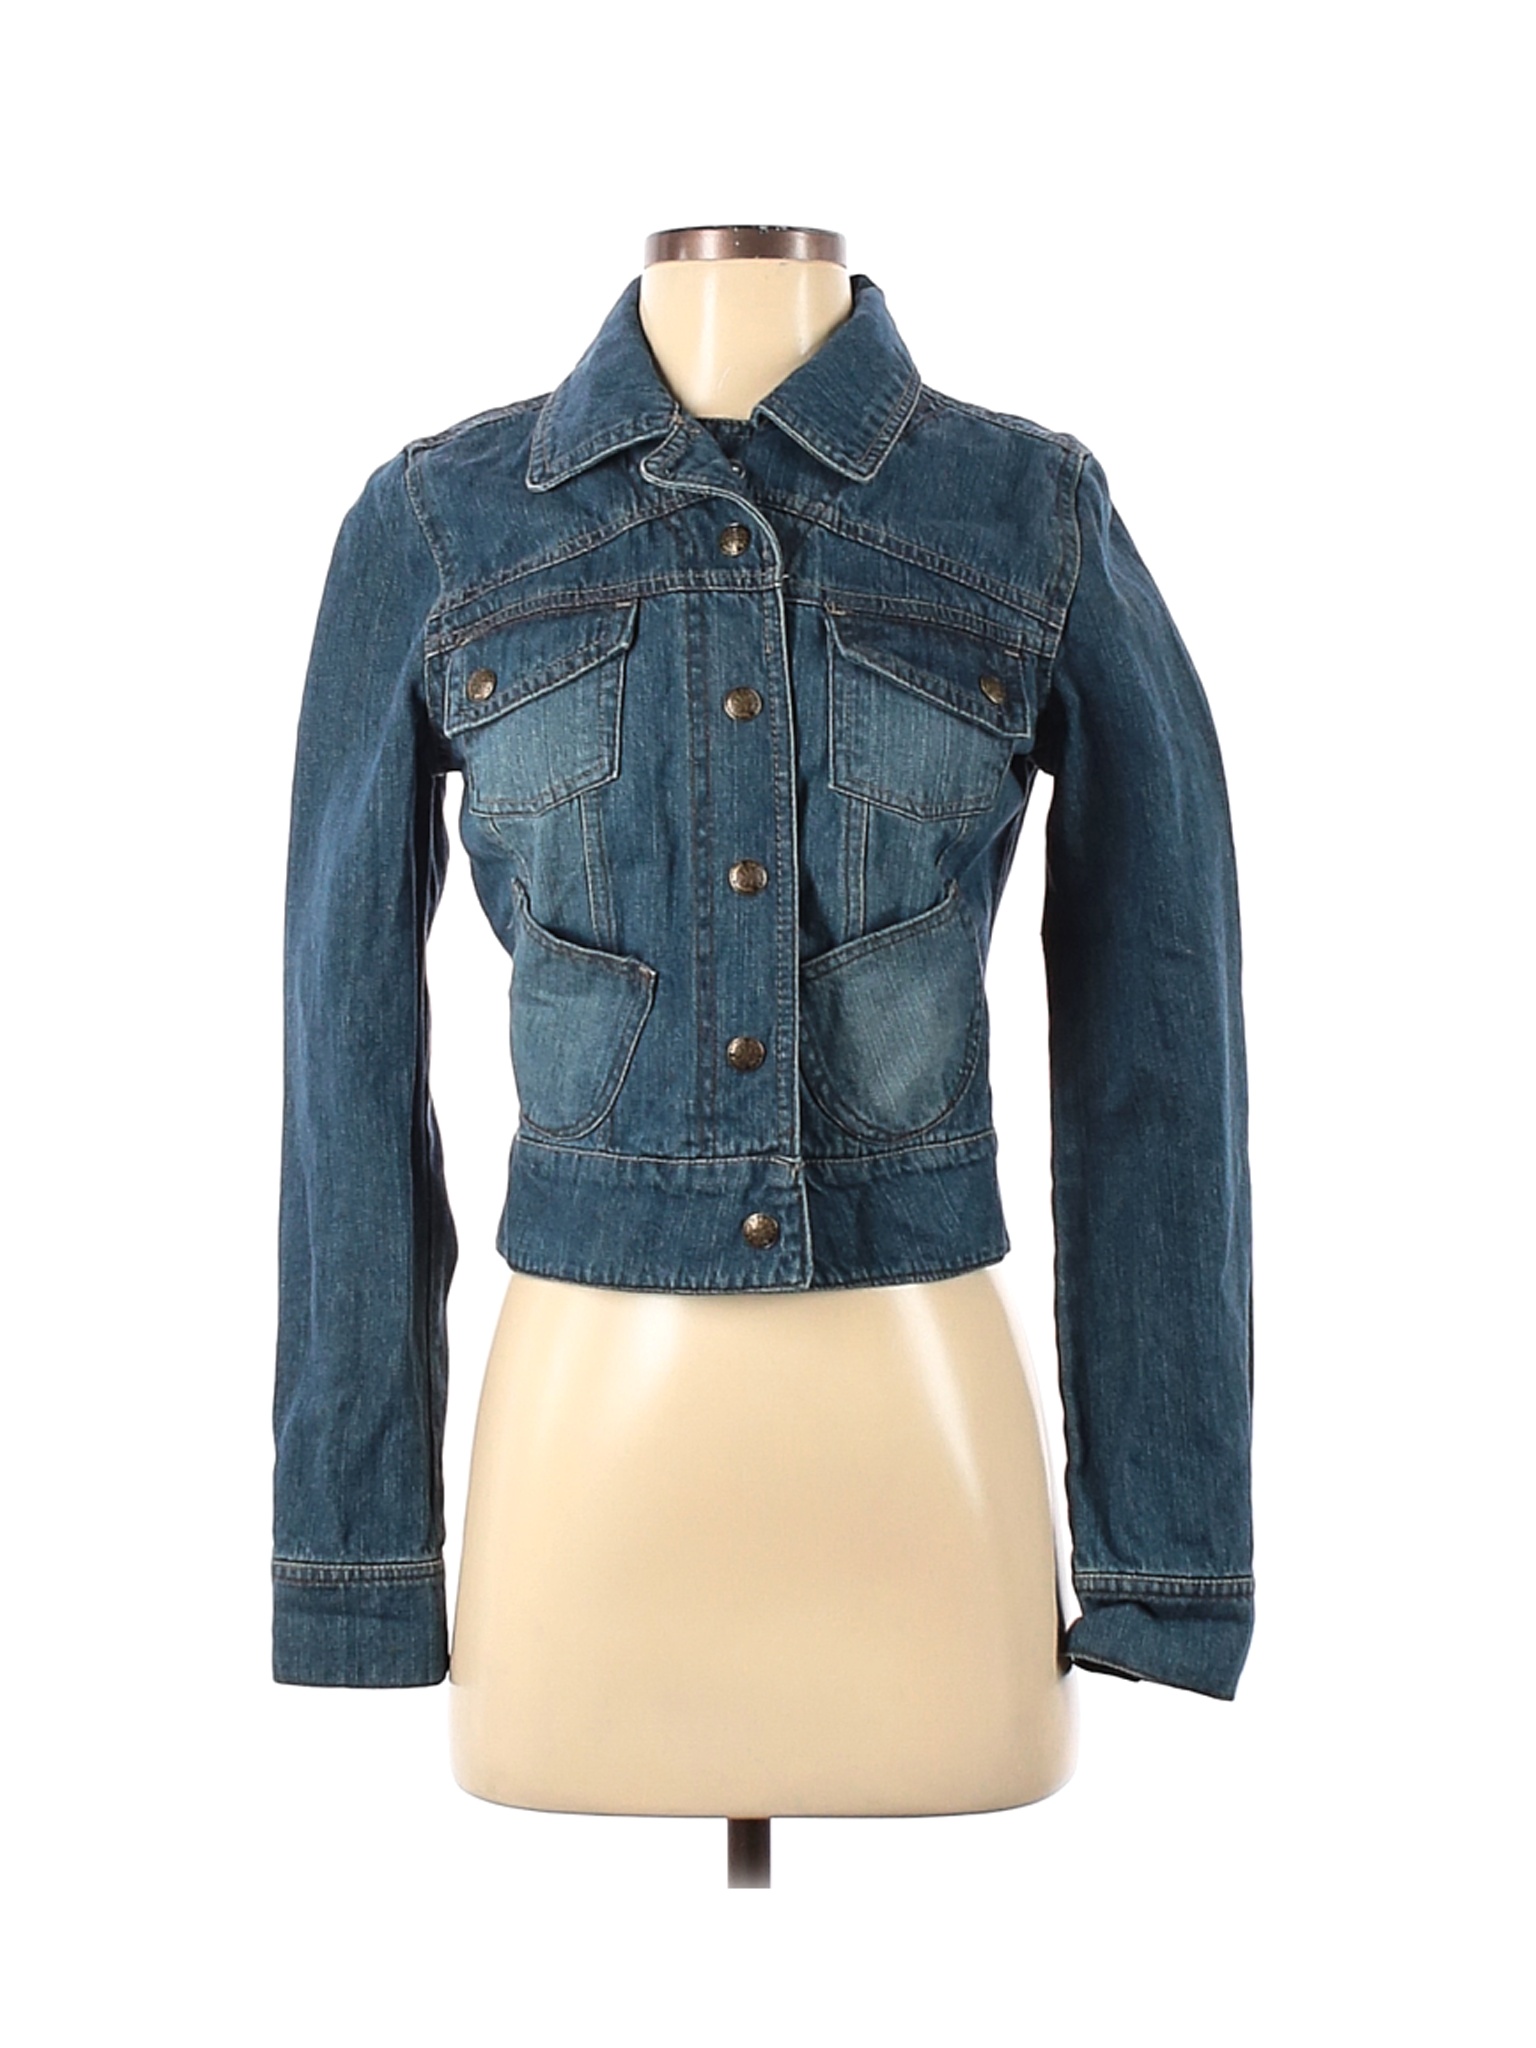 Squeeze Women Blue Denim Jacket S | eBay